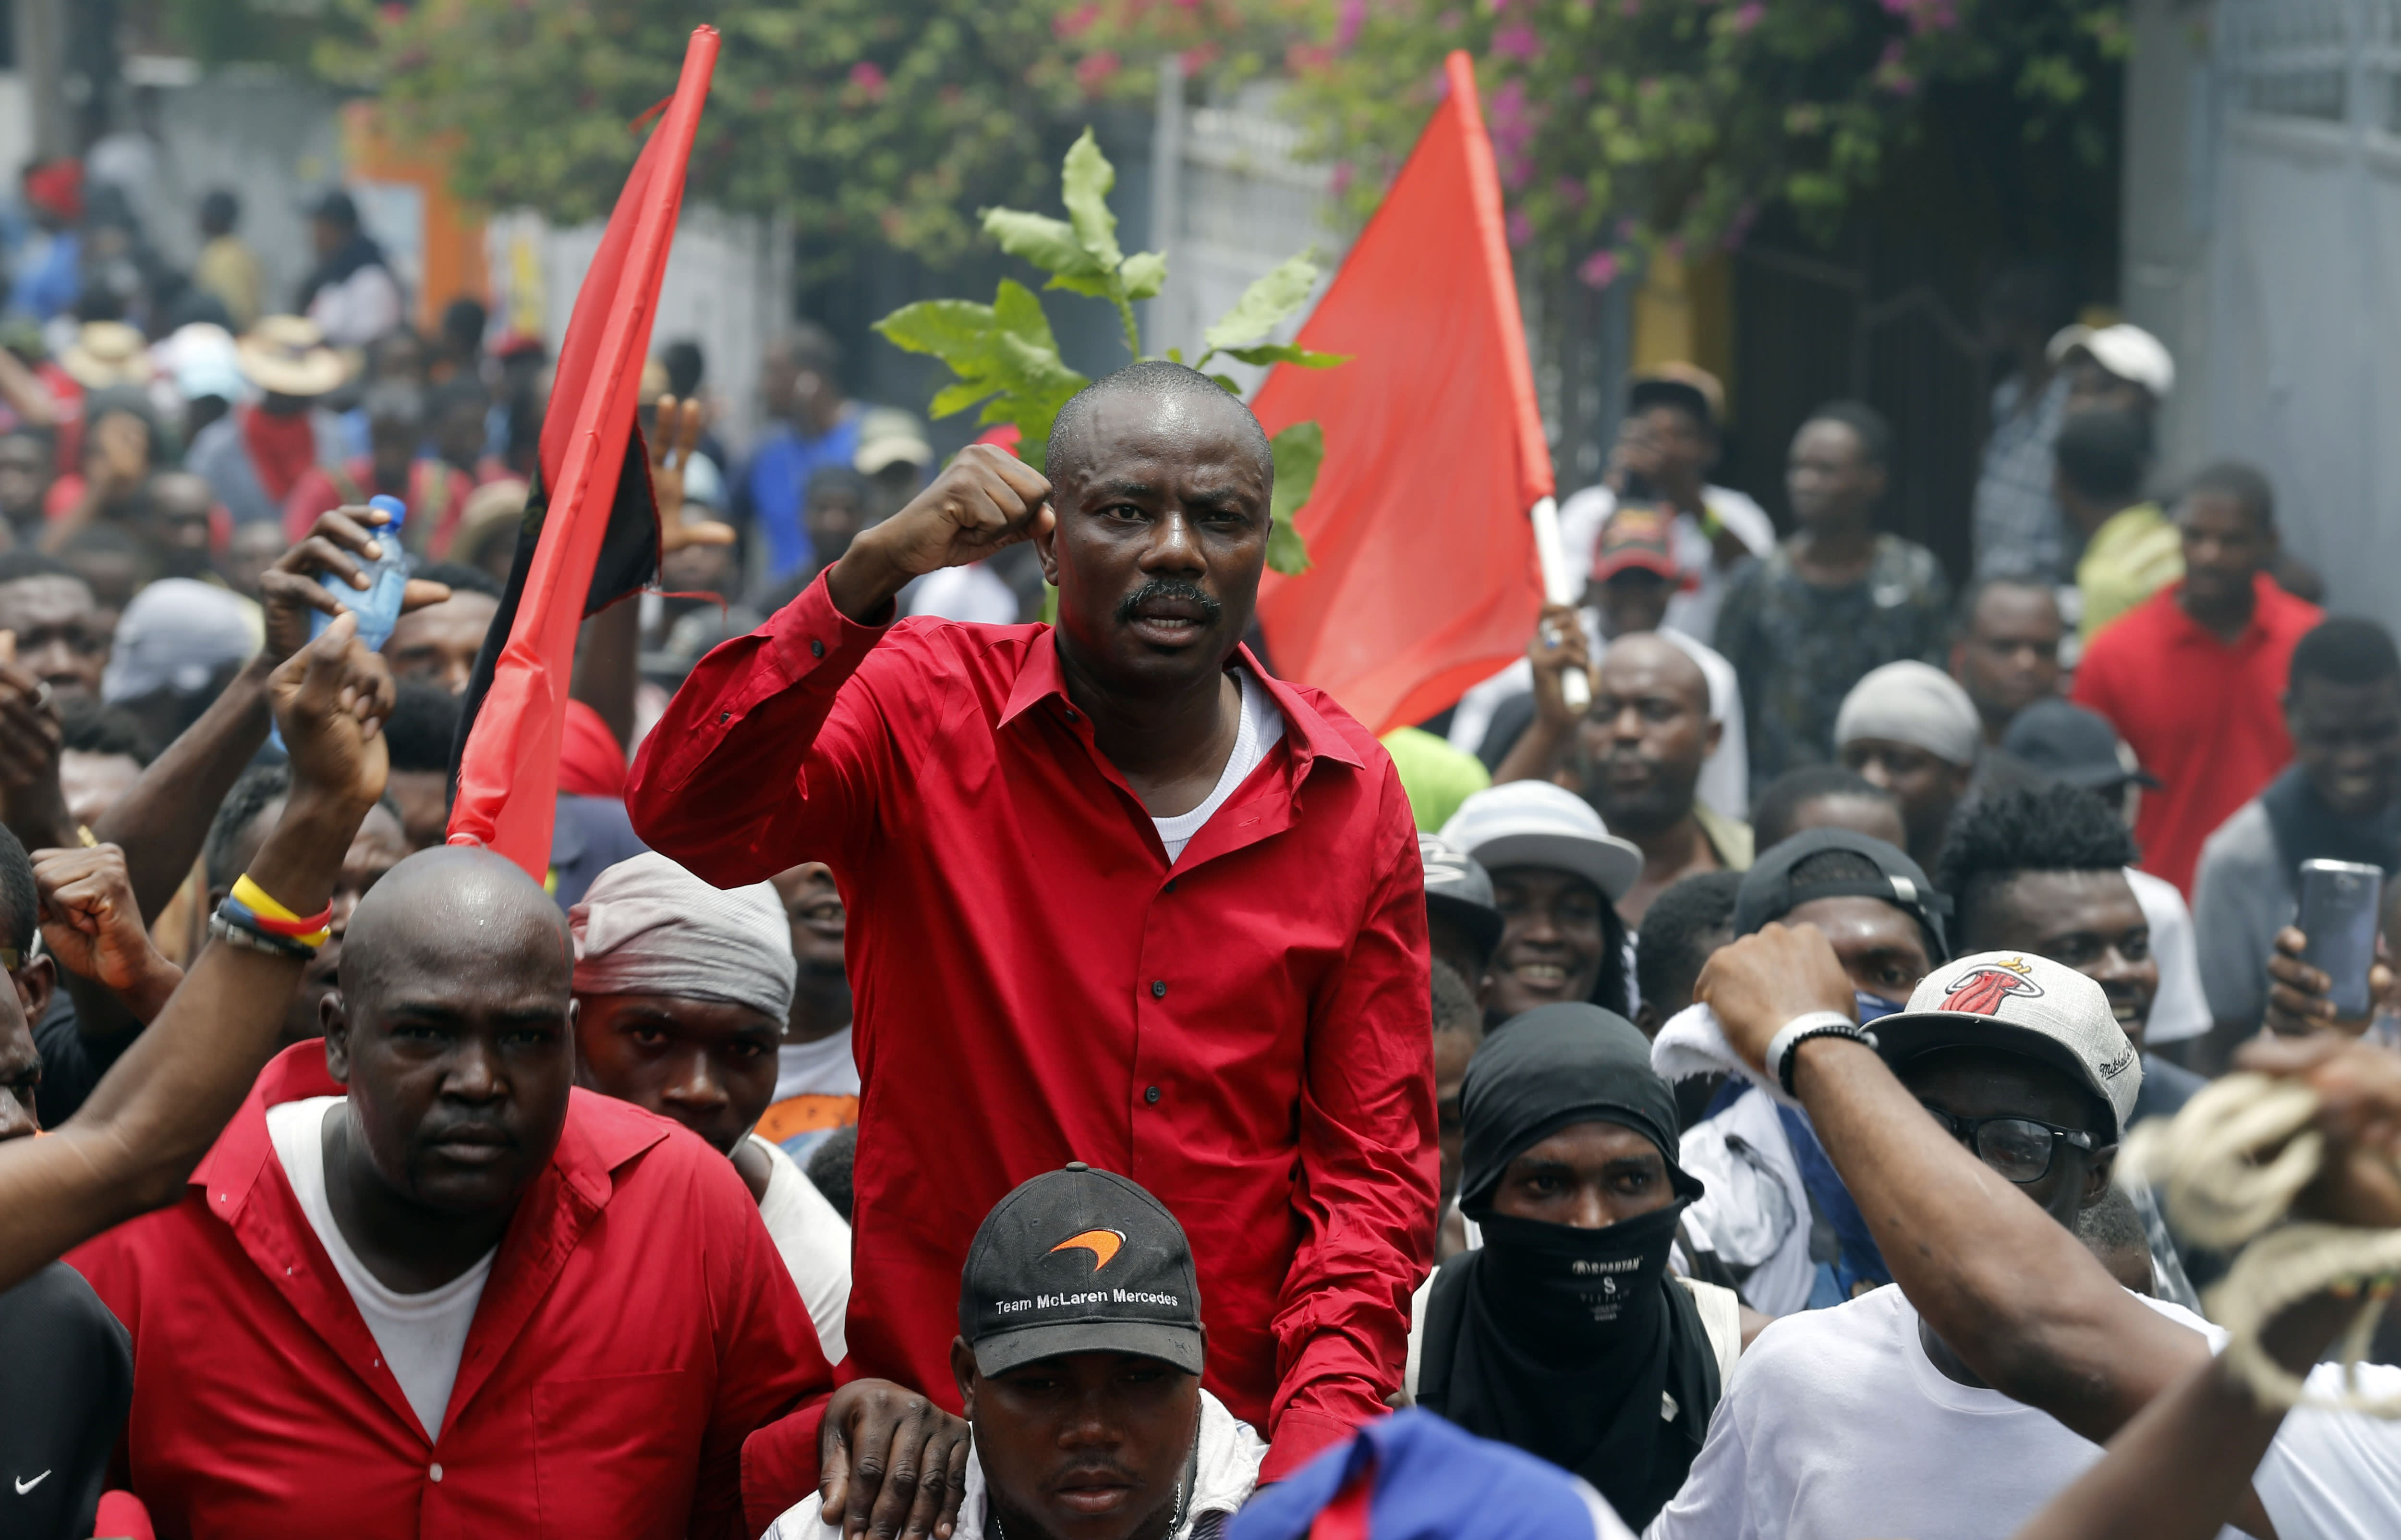 Workers' Struggle in Haiti